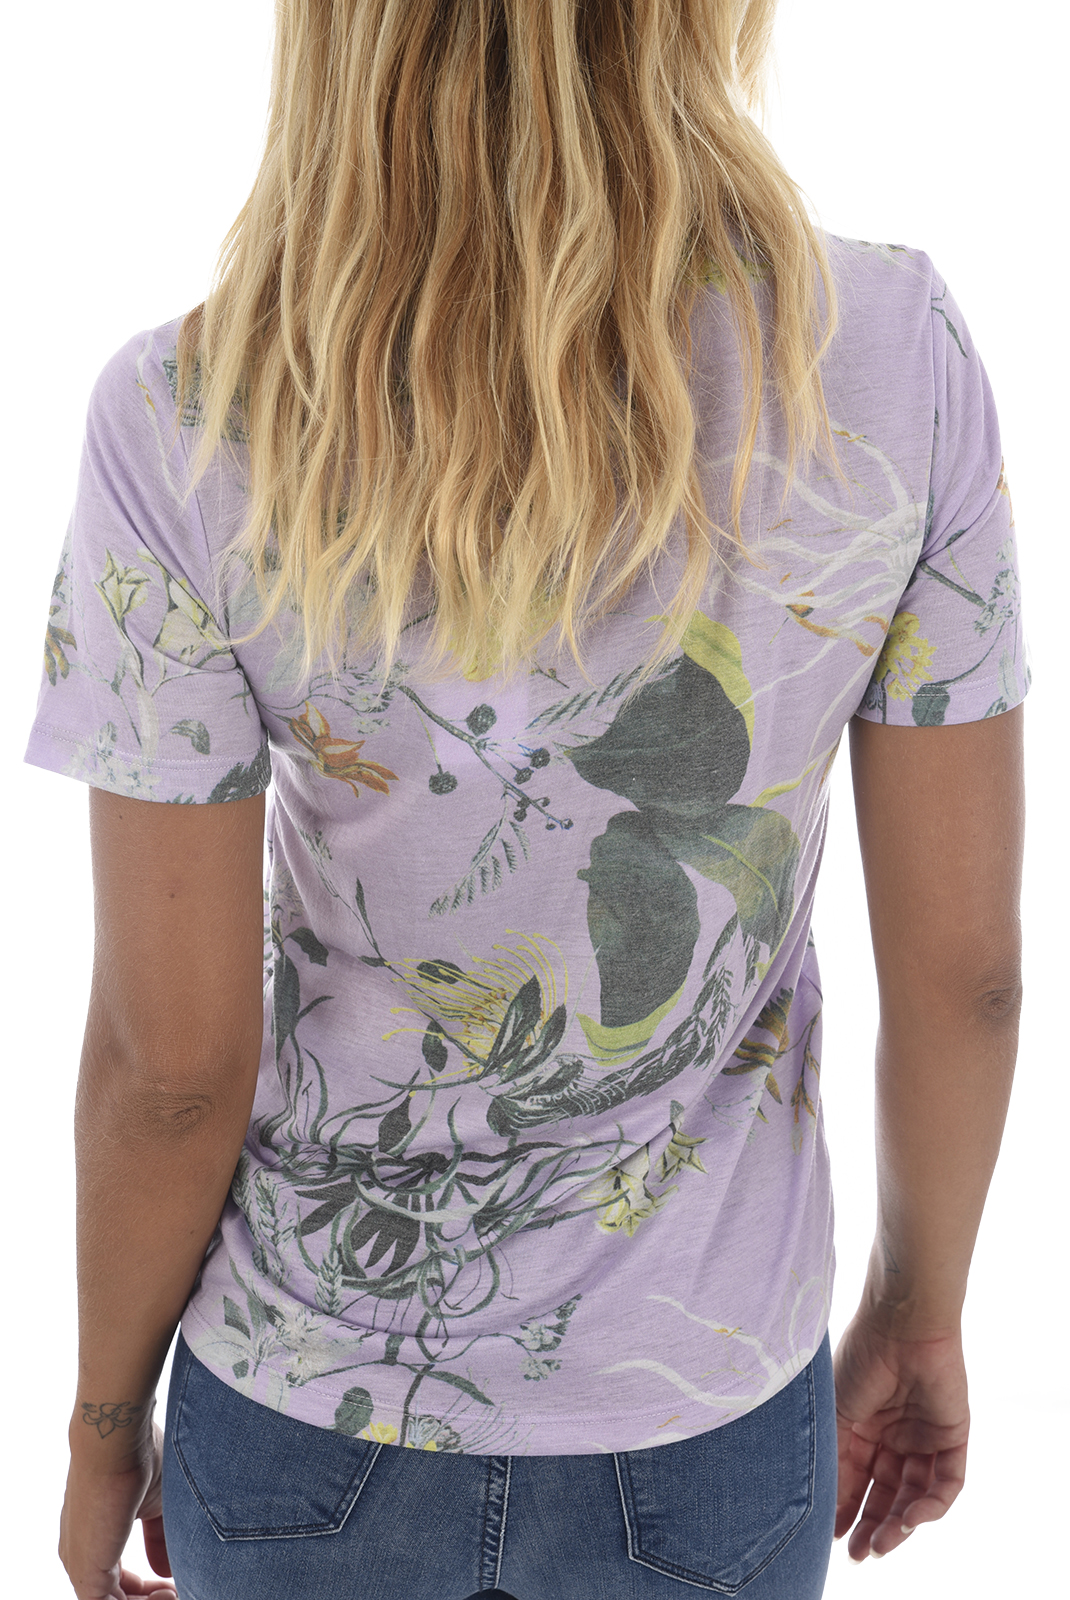 T-Shirt violet fleuri femme - Guess W82i26 